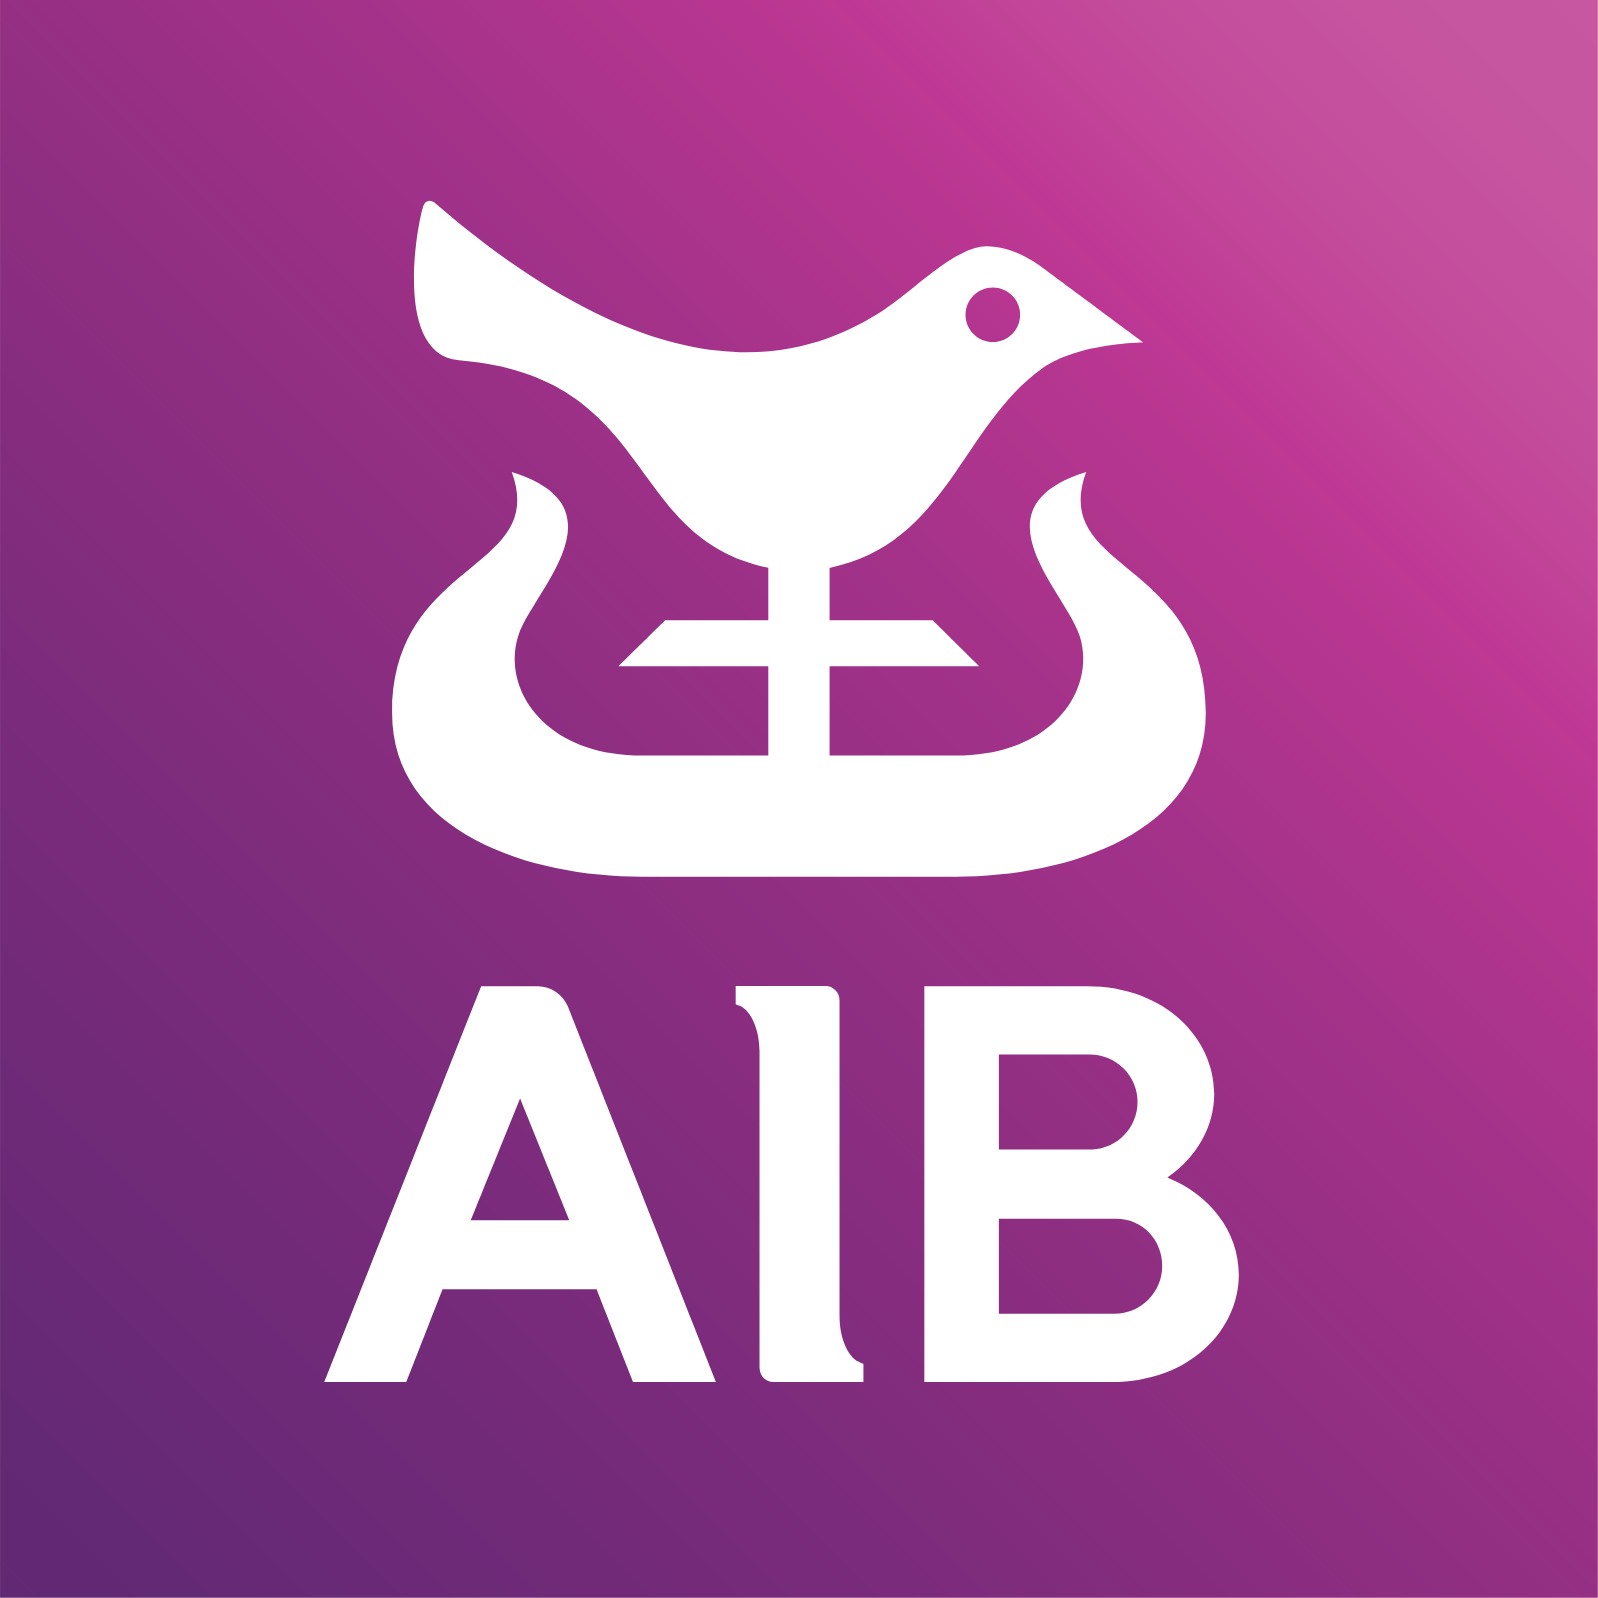 AIB Group (Allied Irish Banks)  logo (PNG transparent)